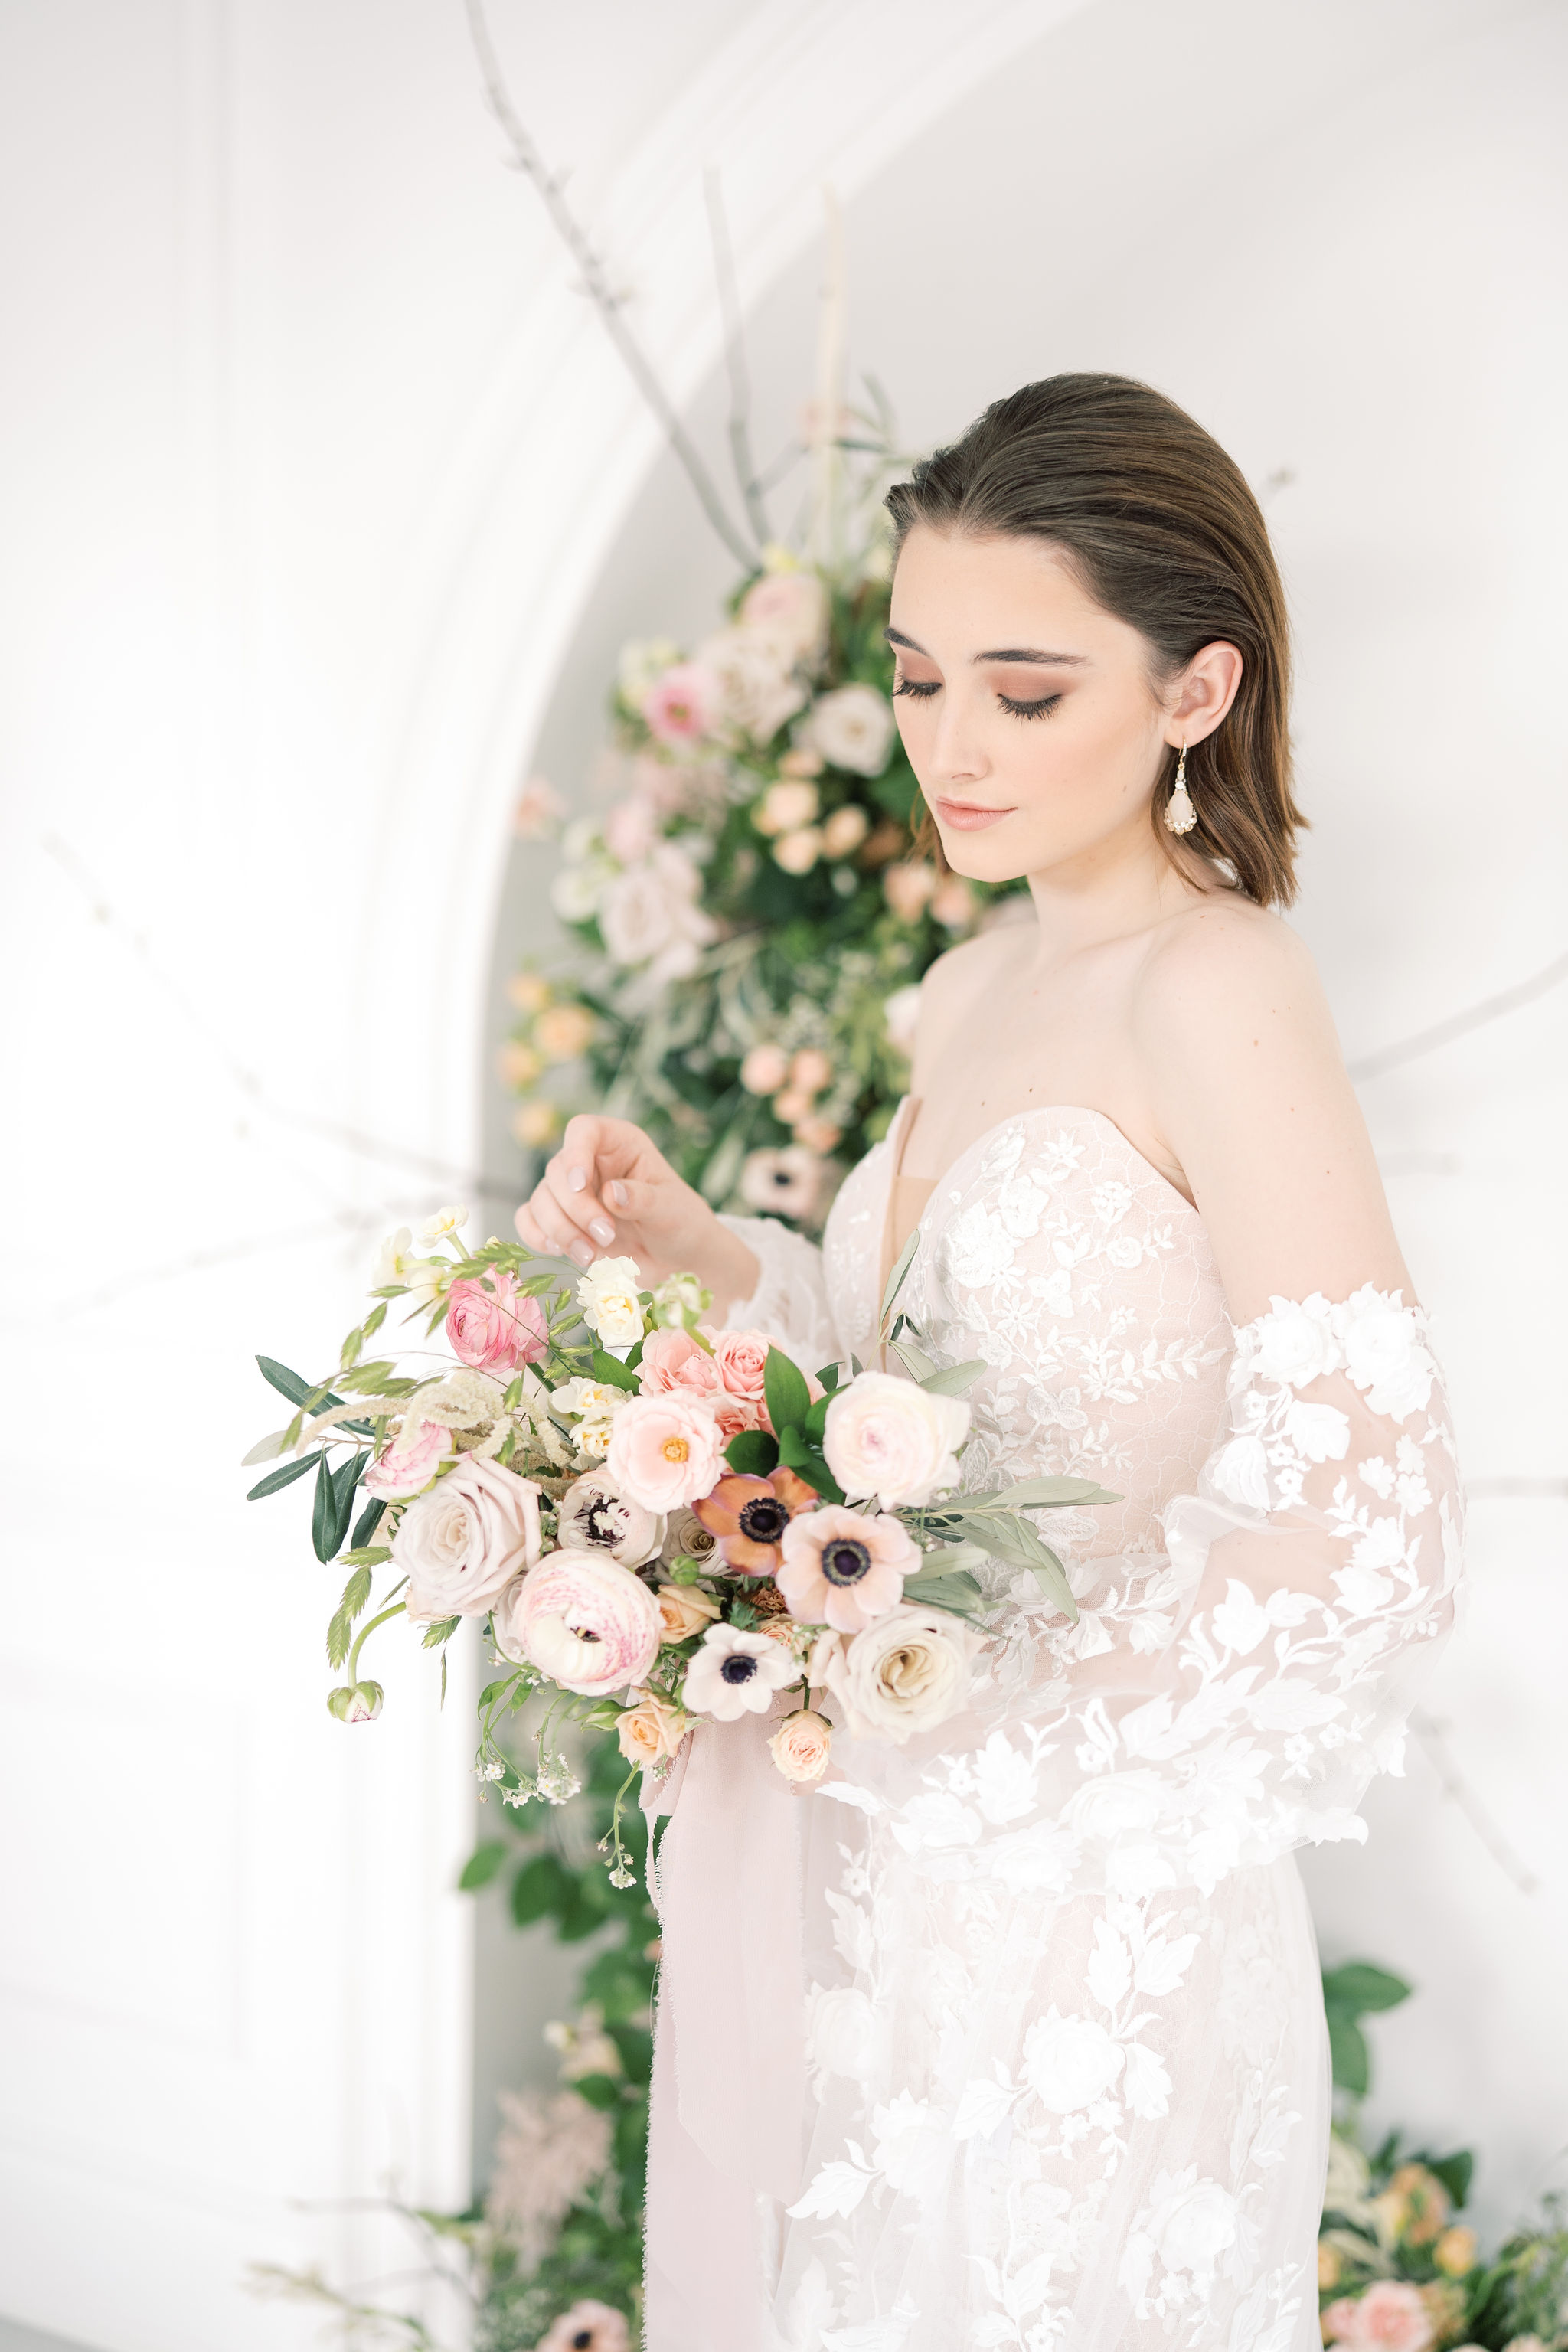 Bridal Portrait with Floral Arch